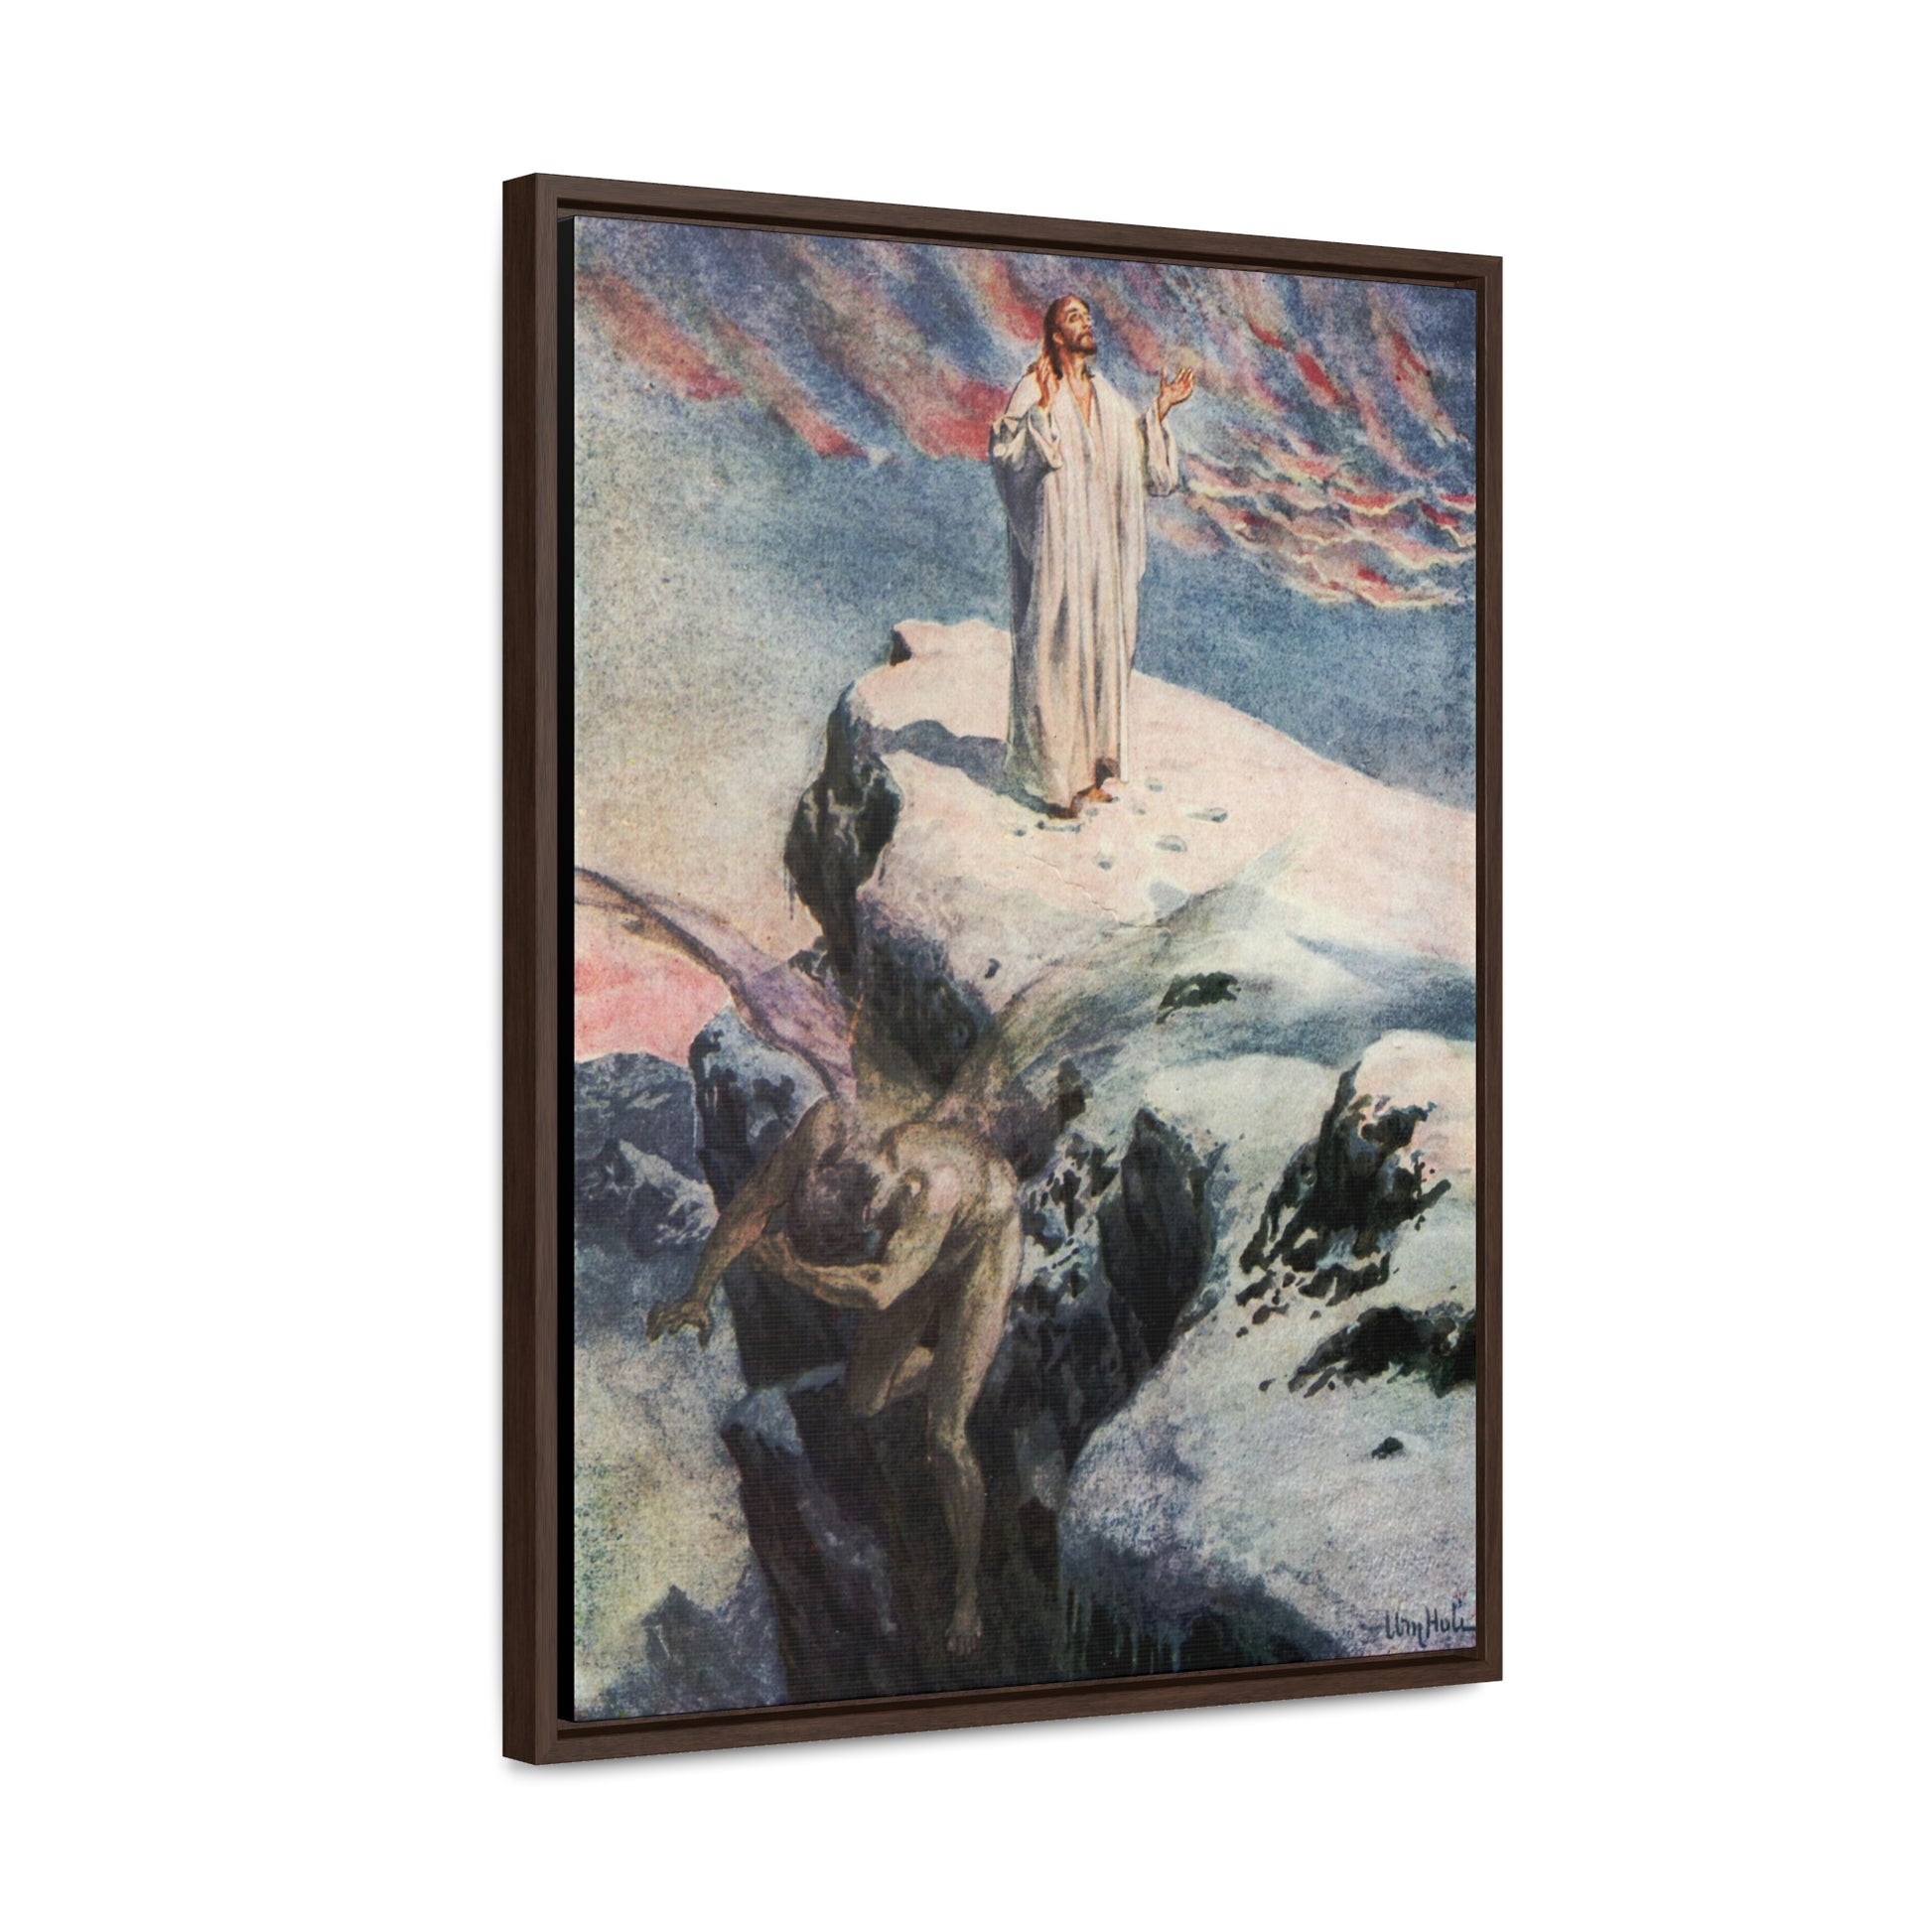 The Temptation of Jesus Framed Canvas - Sanctus Art Gallery